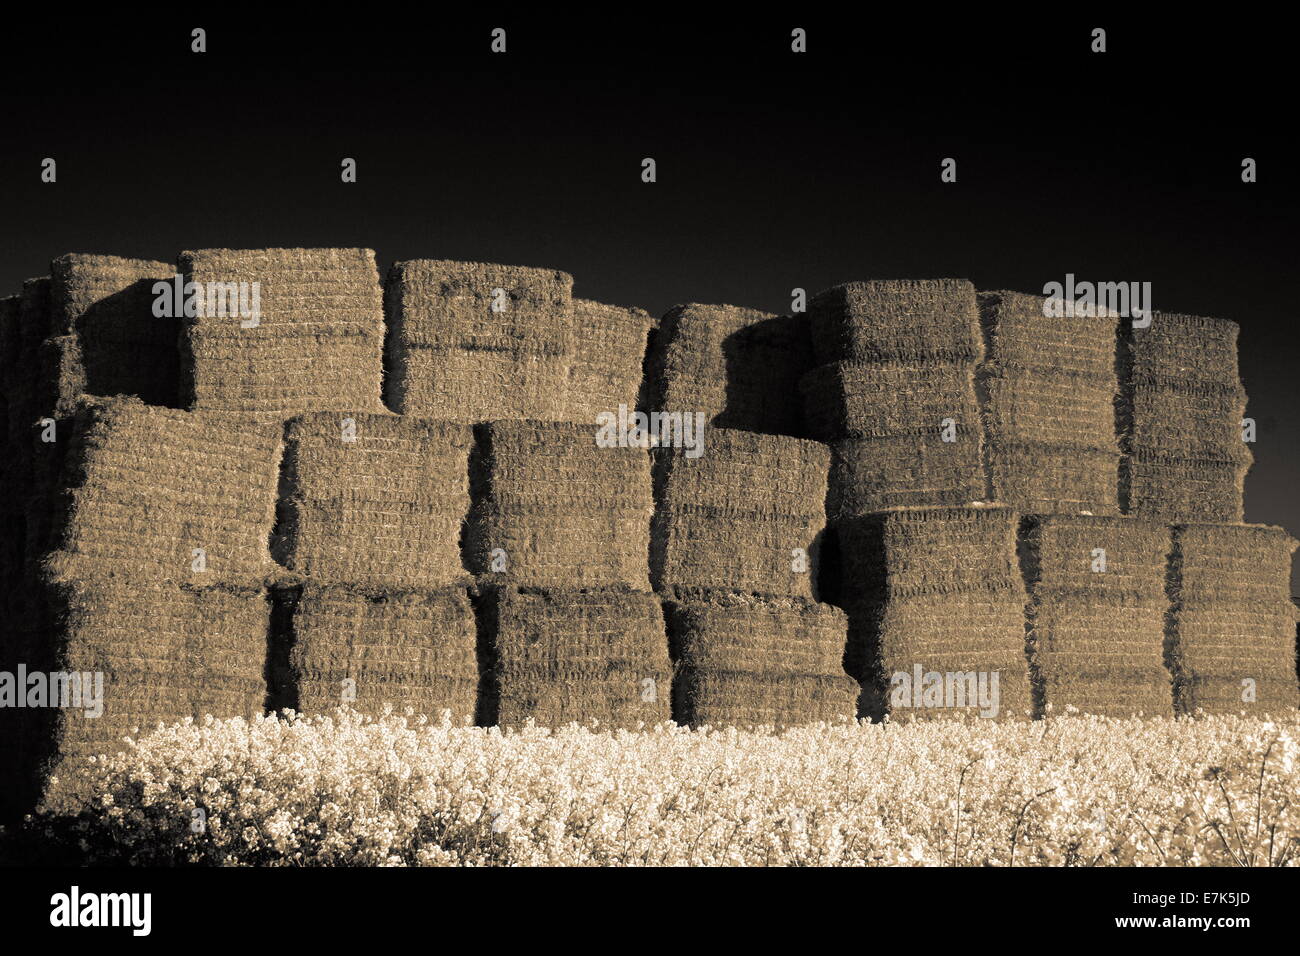 Farmers giant haystacks in field of rapessed crop Stock Photo